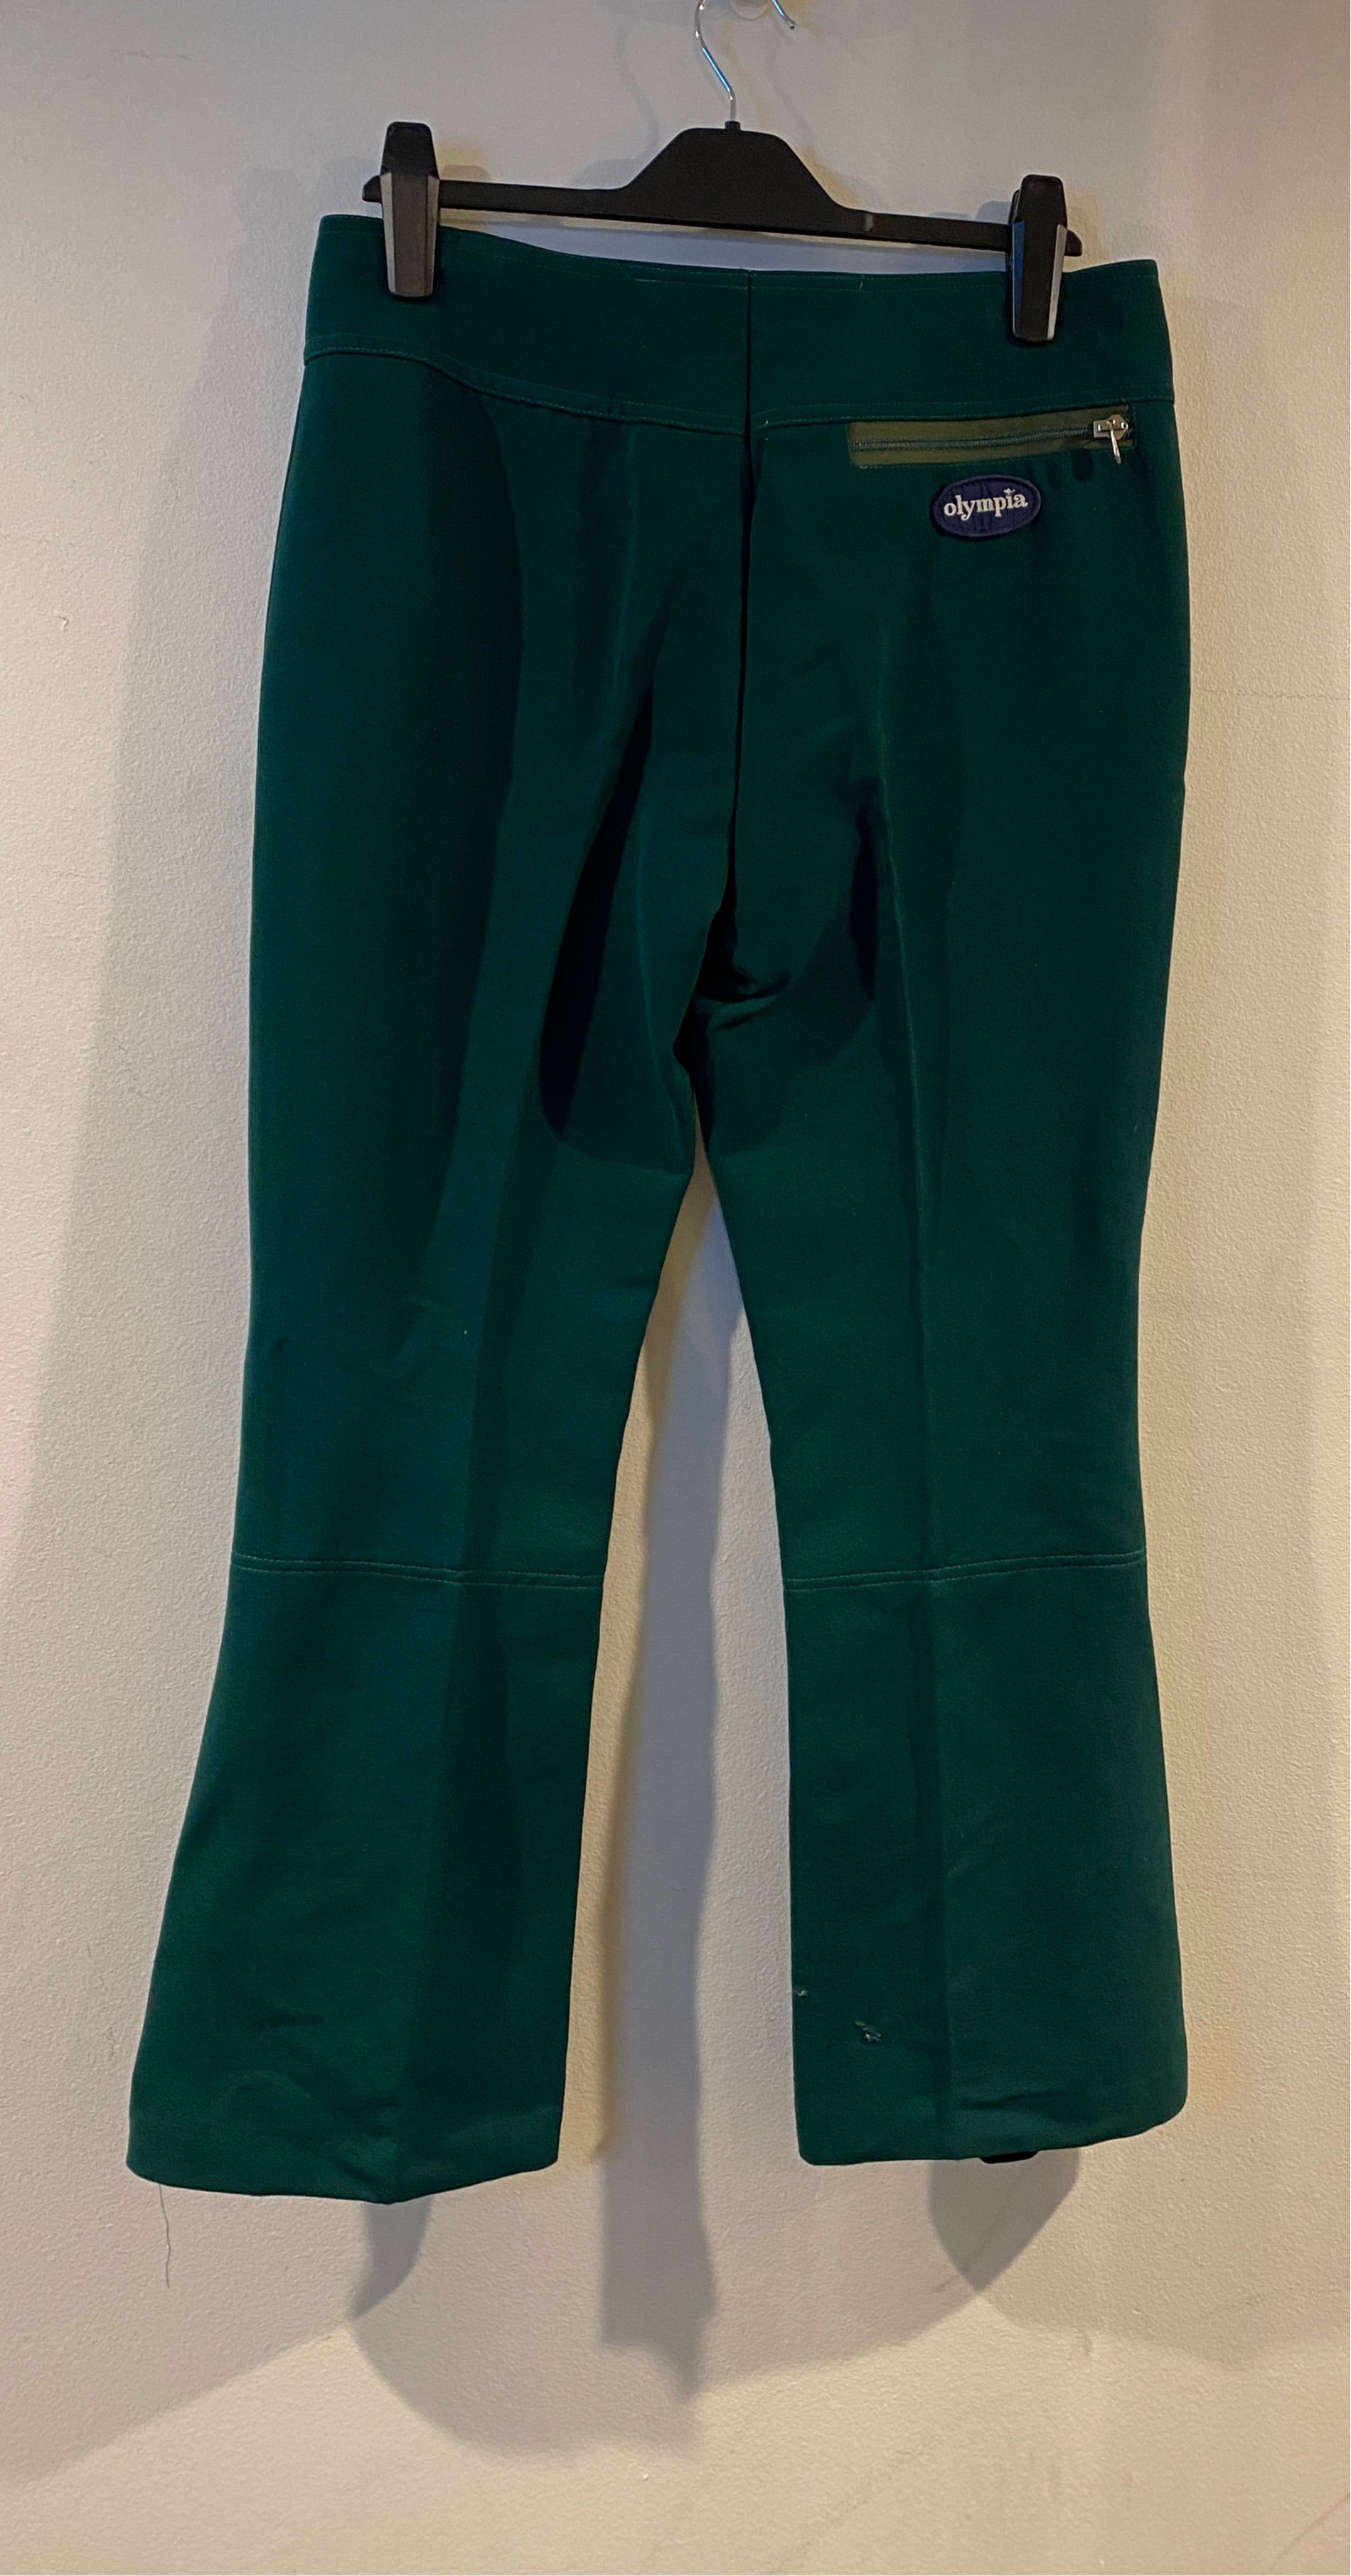 Vintage Olympia green ski pants. hanging, rear view